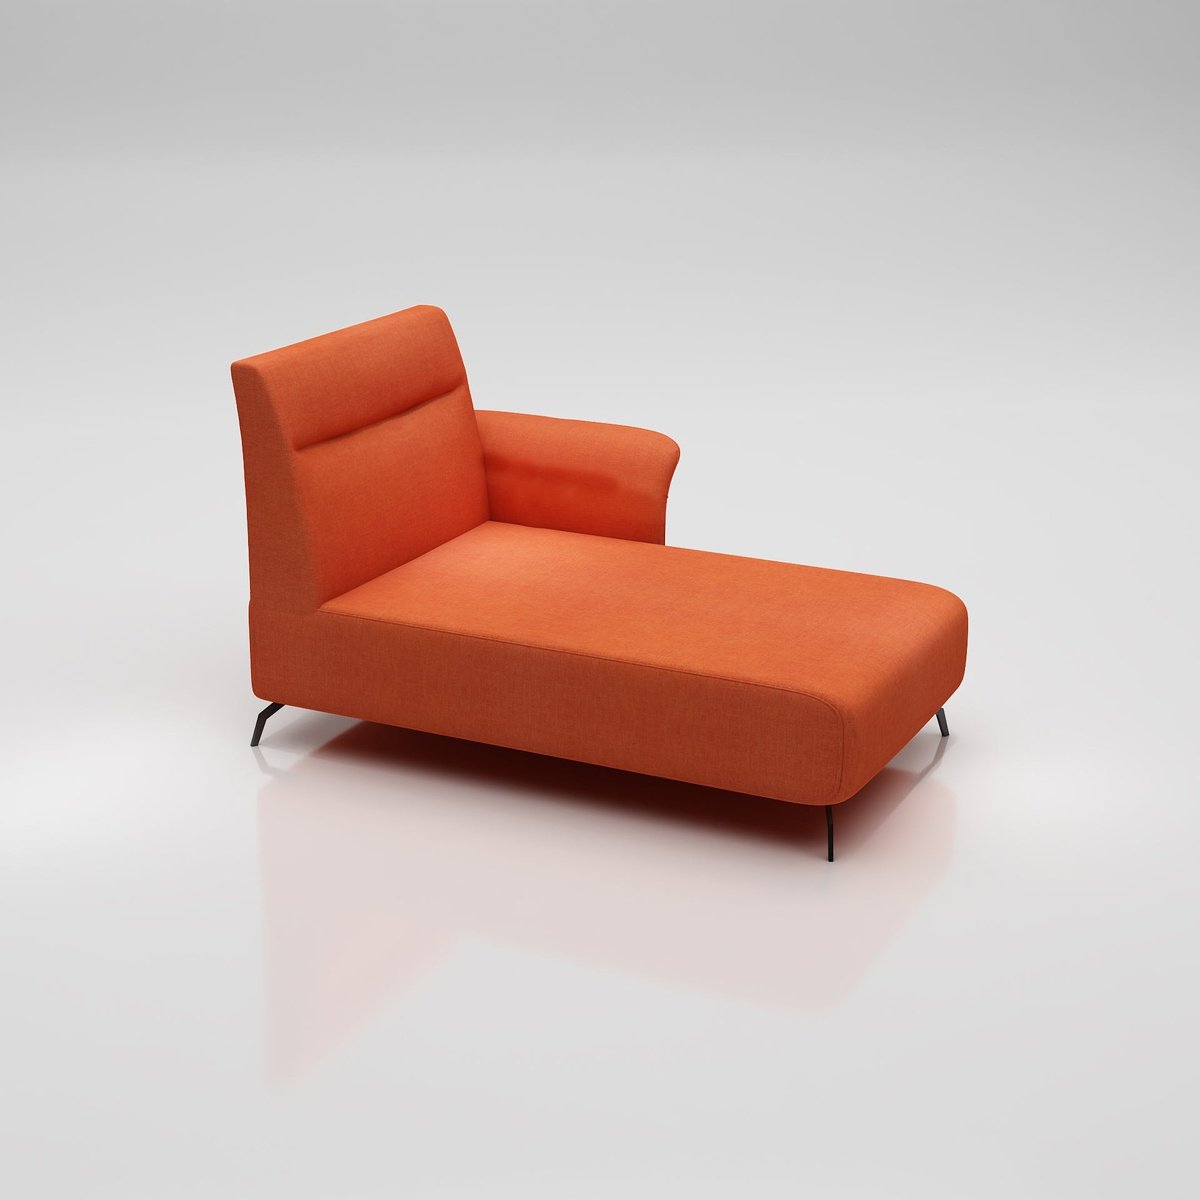 FU-BLISS L SHAPE SOFA SET Mobel Furniture